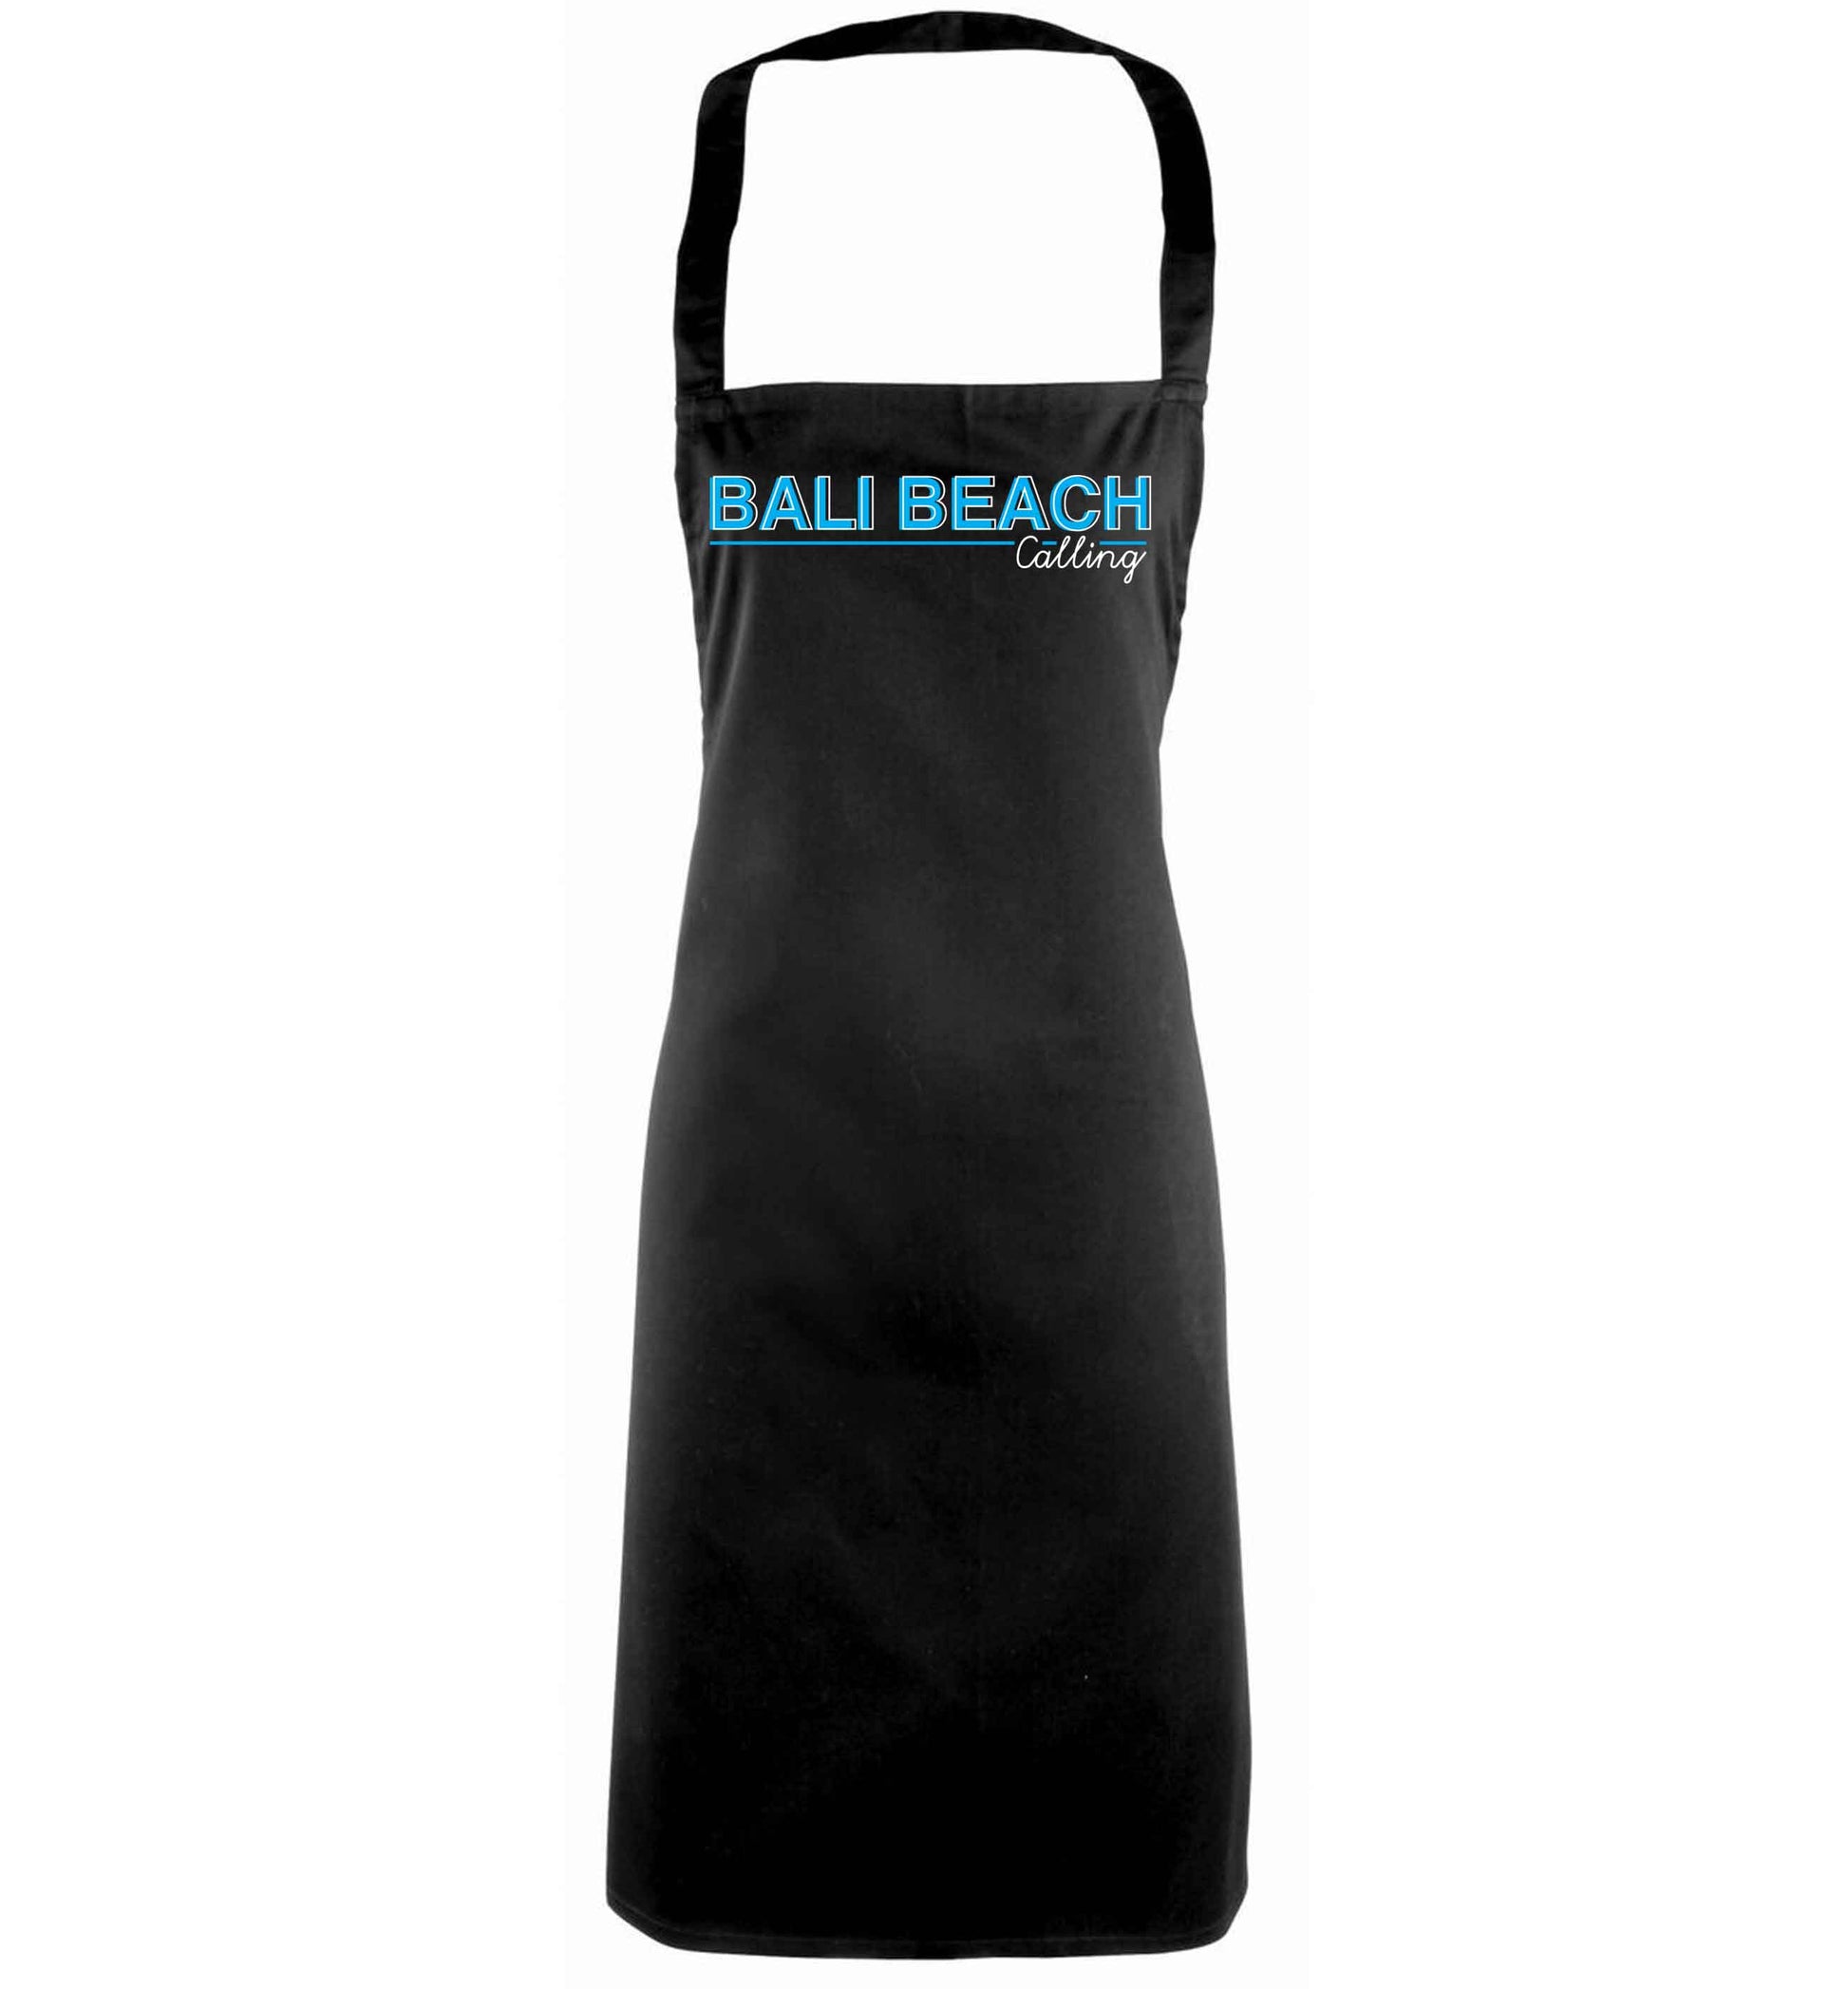 Bali beach calling black apron